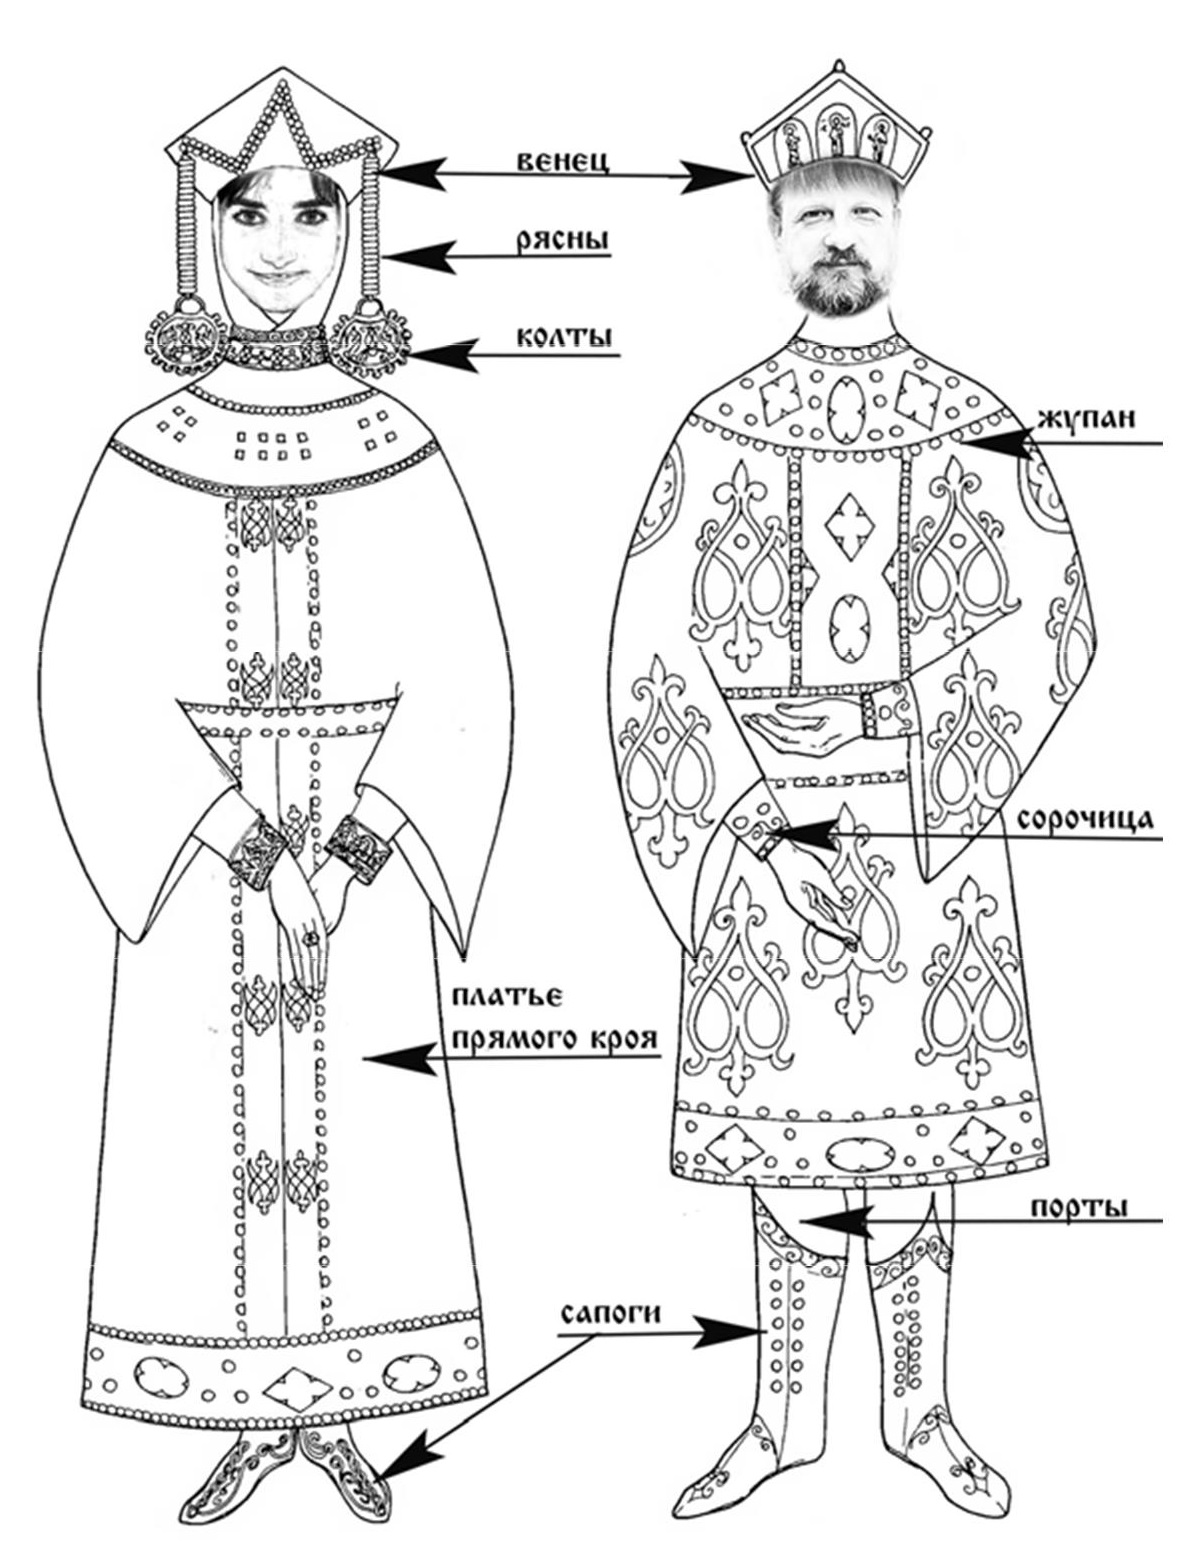 Одежда князя в древней Руси название